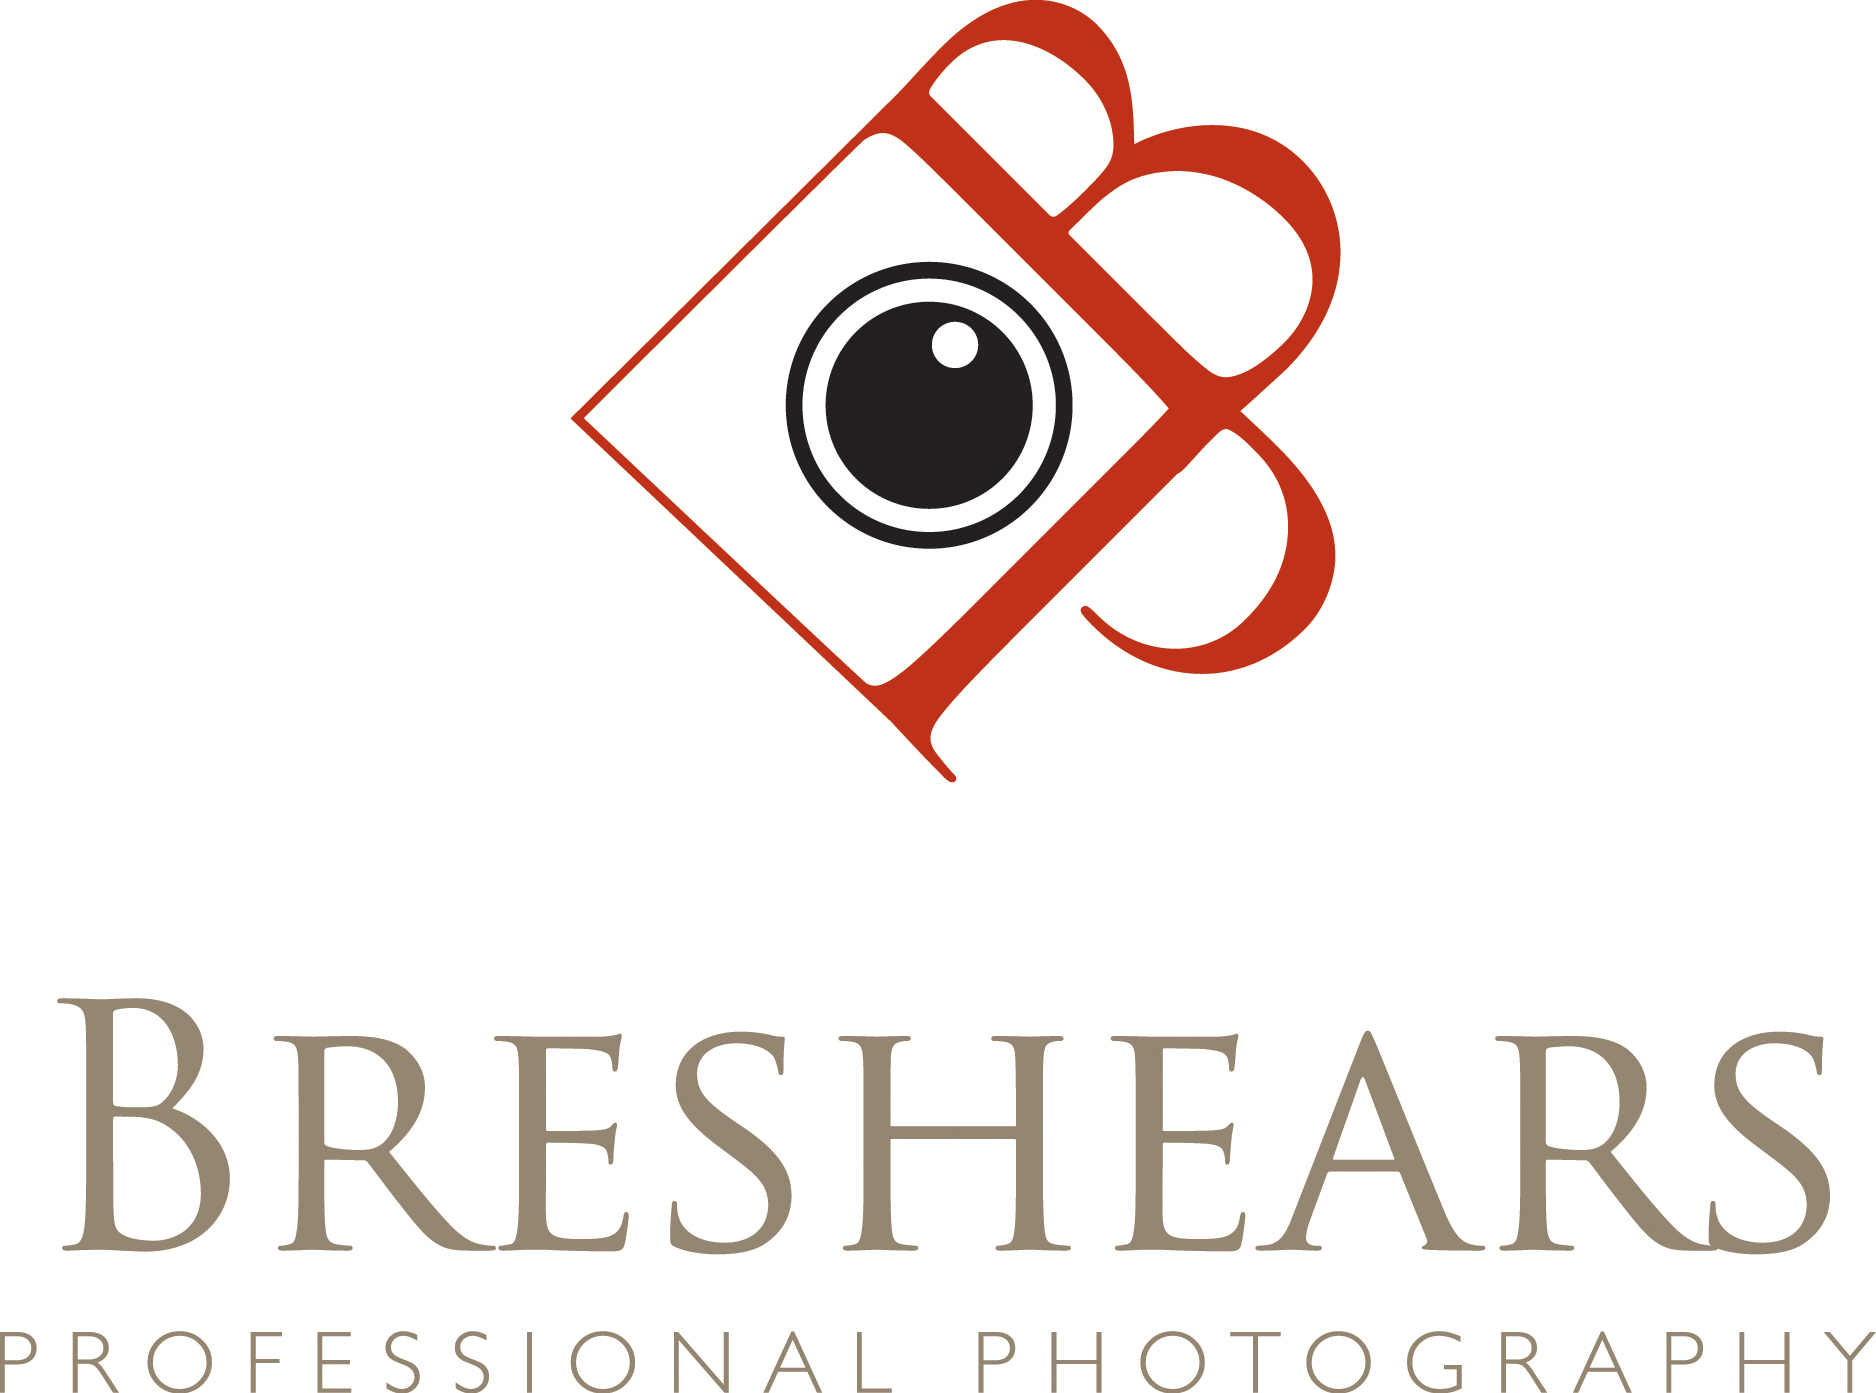 Breshears Professional Photography